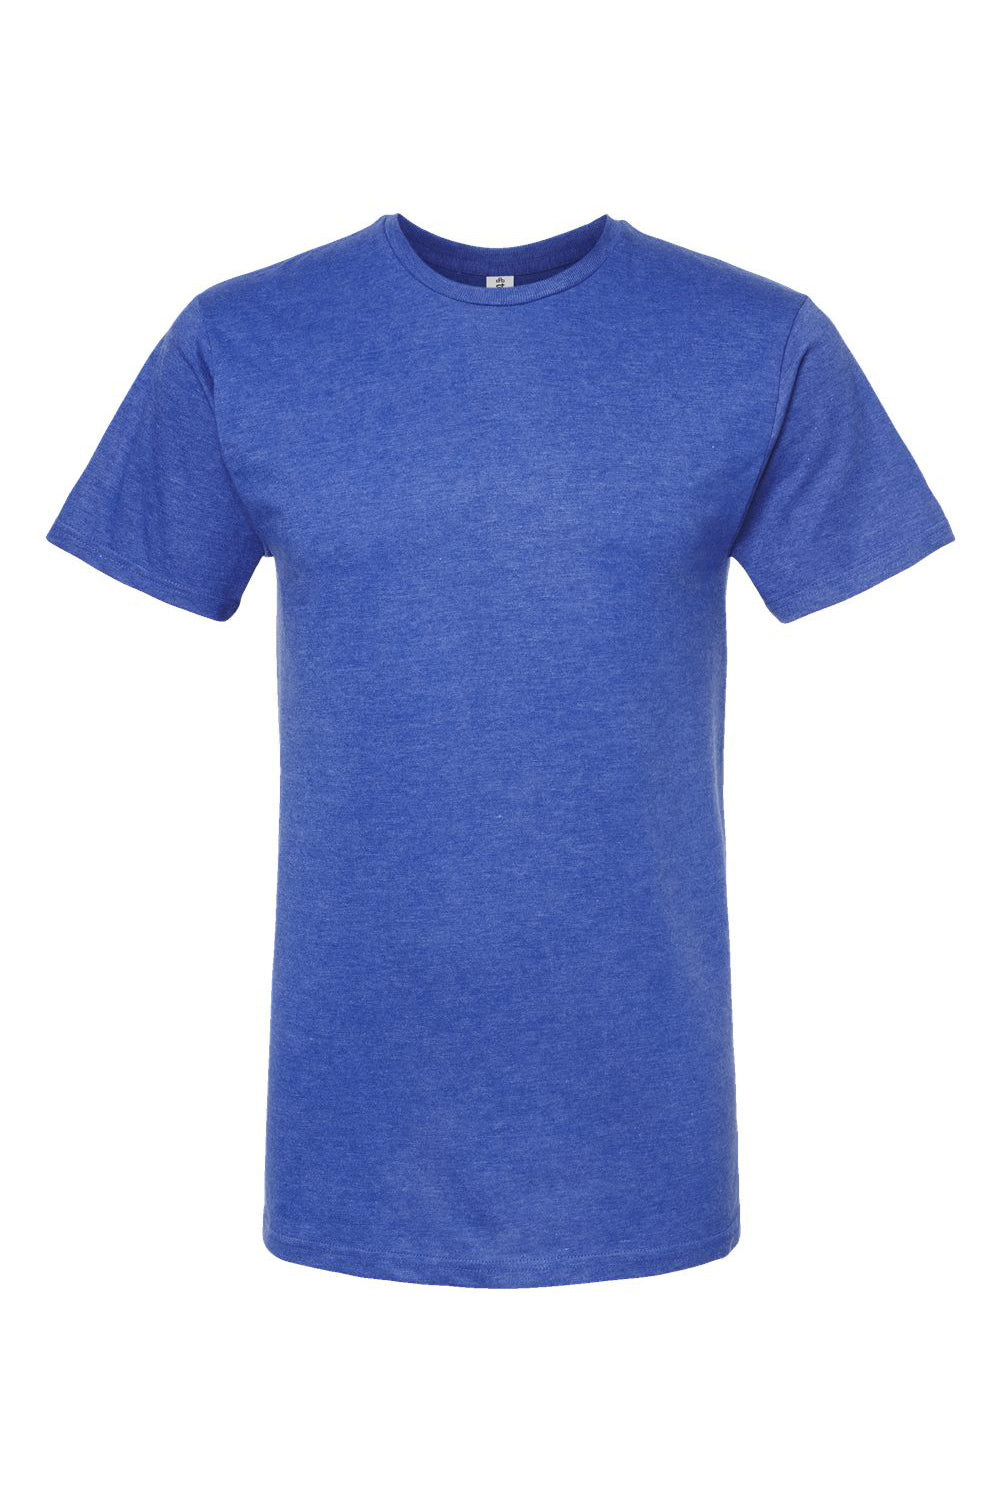 Tultex 290 Mens Jersey Short Sleeve Crewneck T-Shirt Heather Royal Blue Flat Front